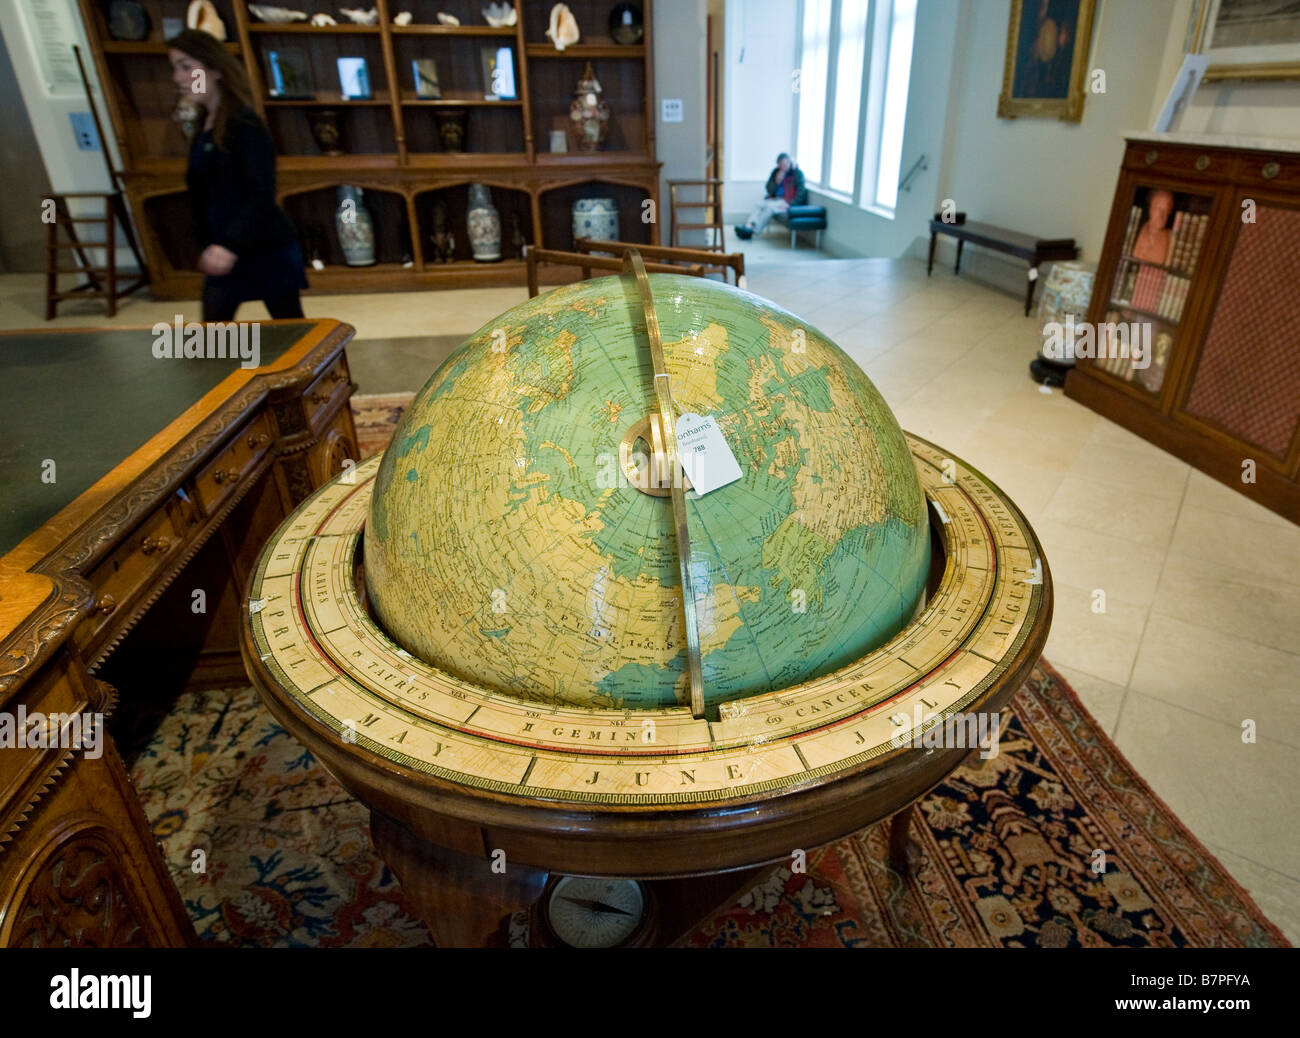 A Philips 18 inch Merchant Shippers' globe part of the Bonhams Gentleman's Library sale London UK Stock Photo